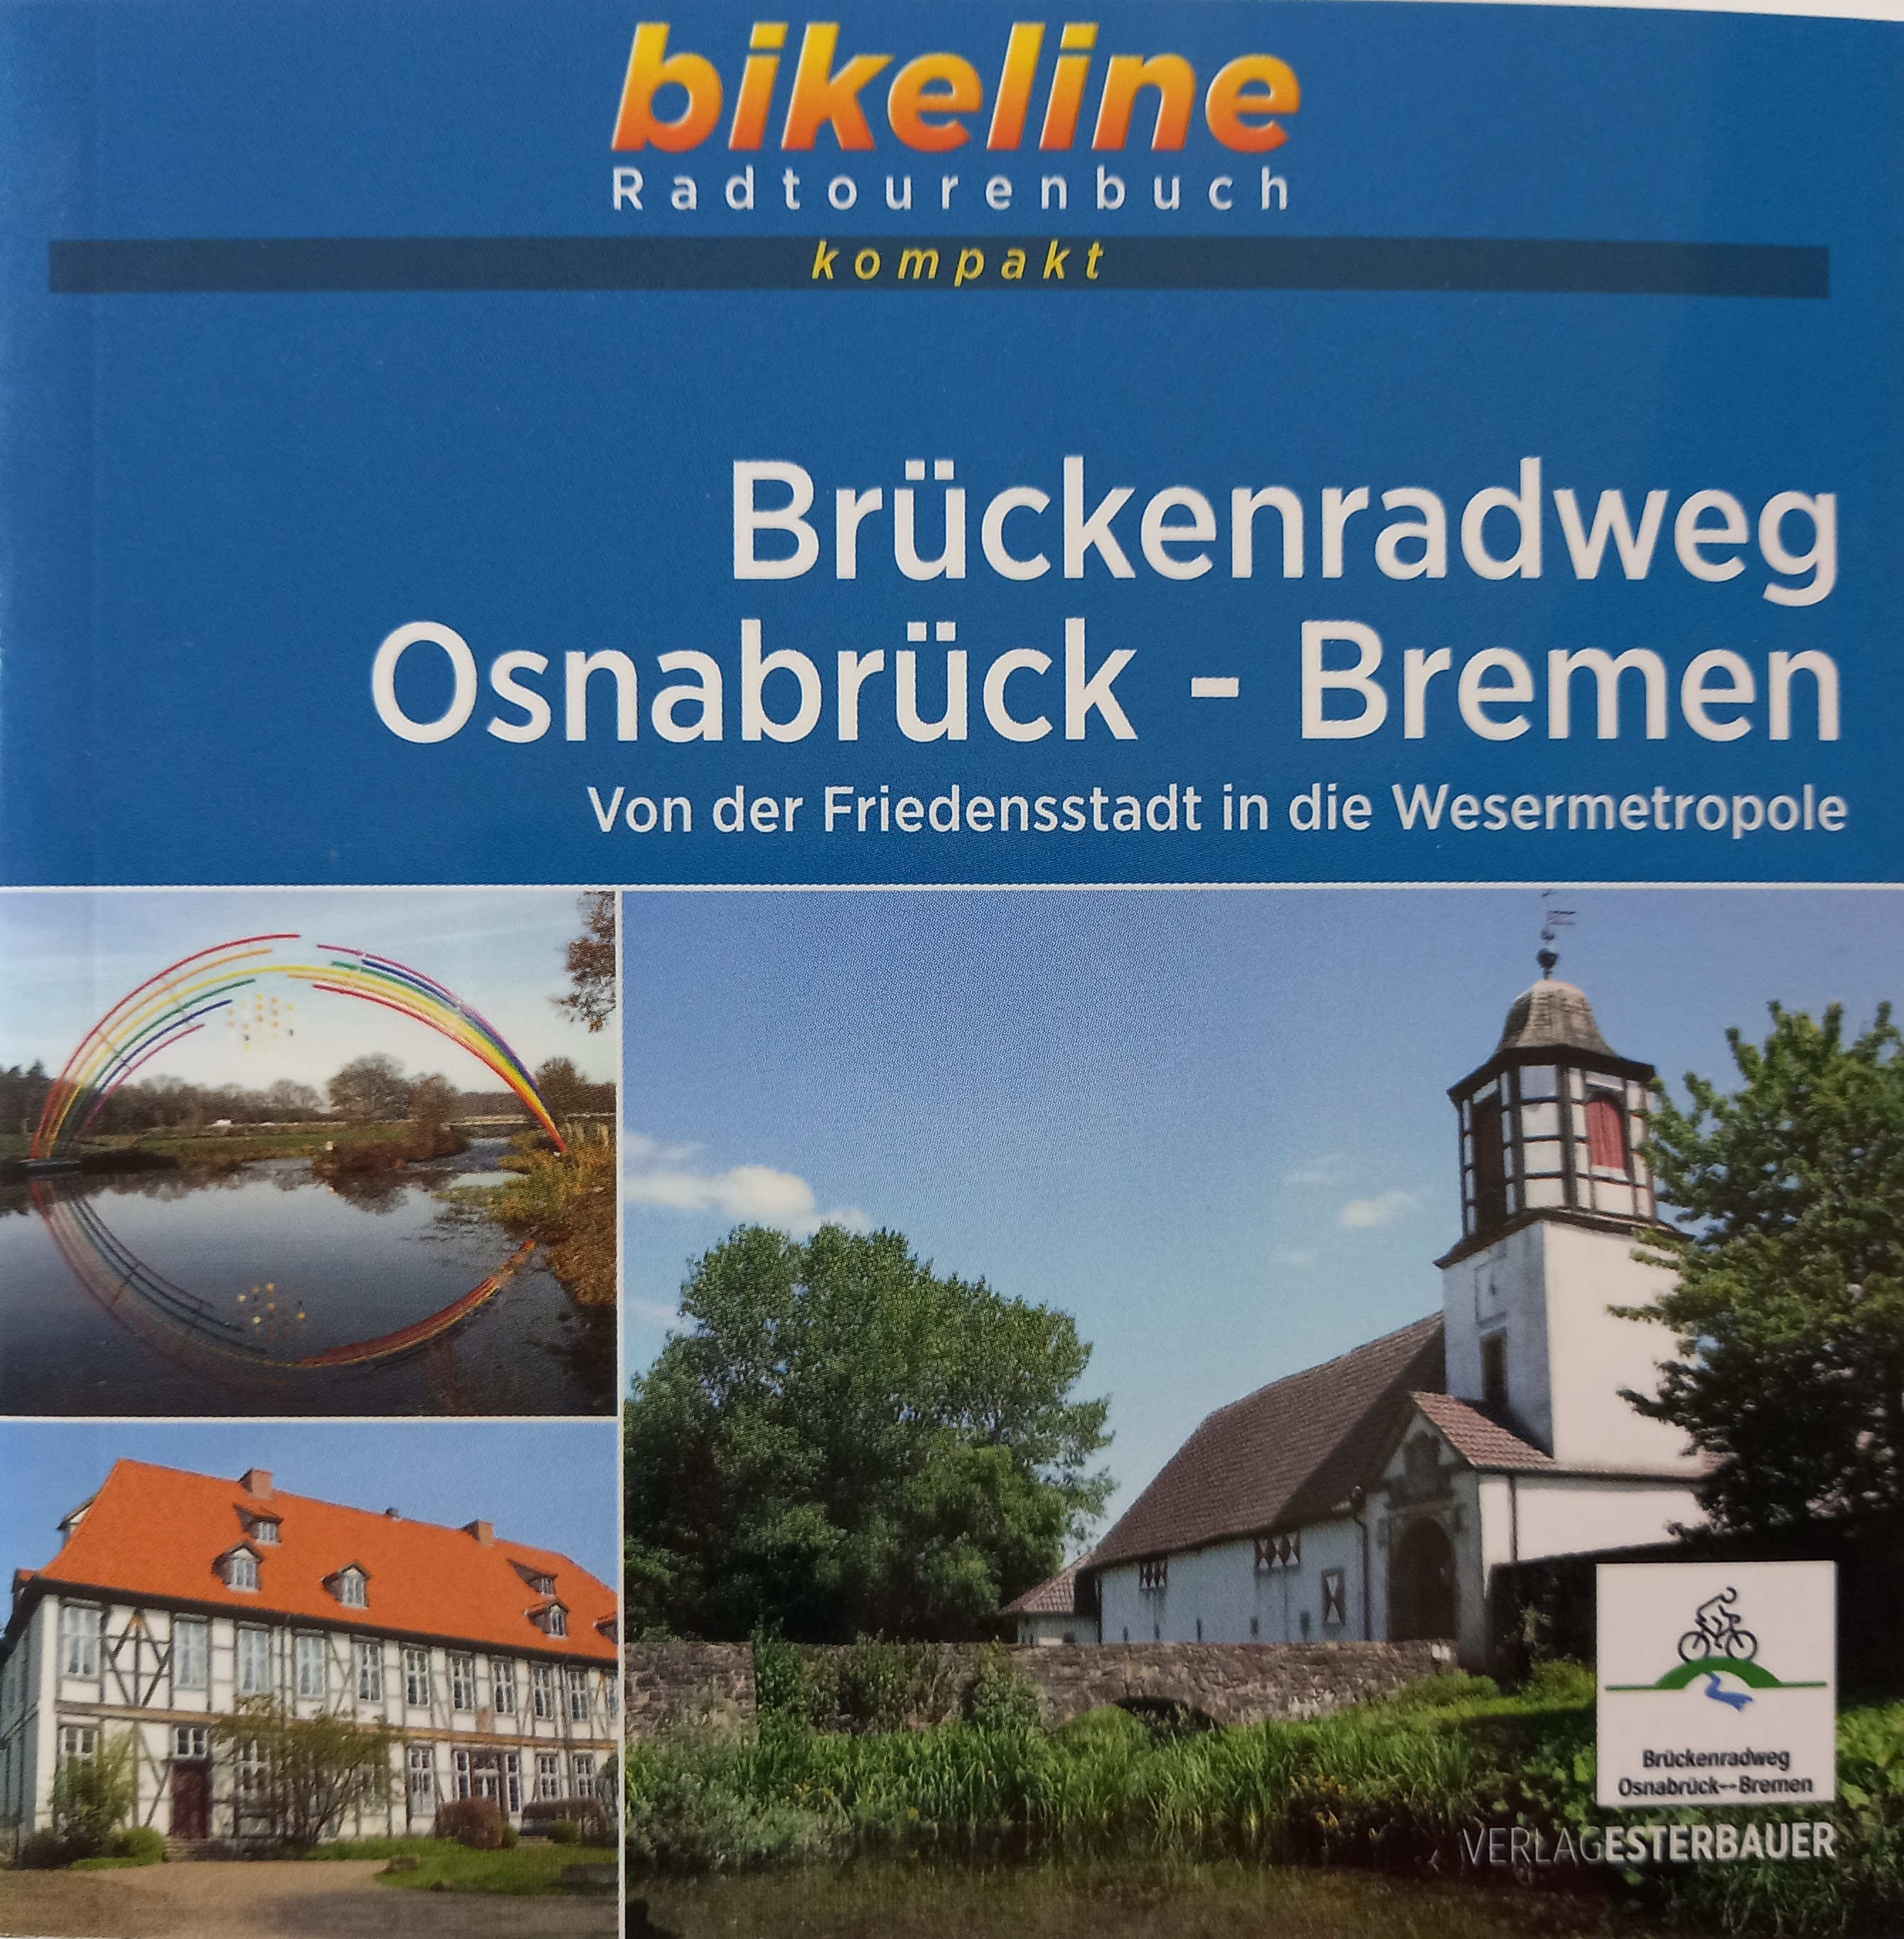 Radfahrkarte: Brückenradweg Osnabrück - Bremen, bikeline